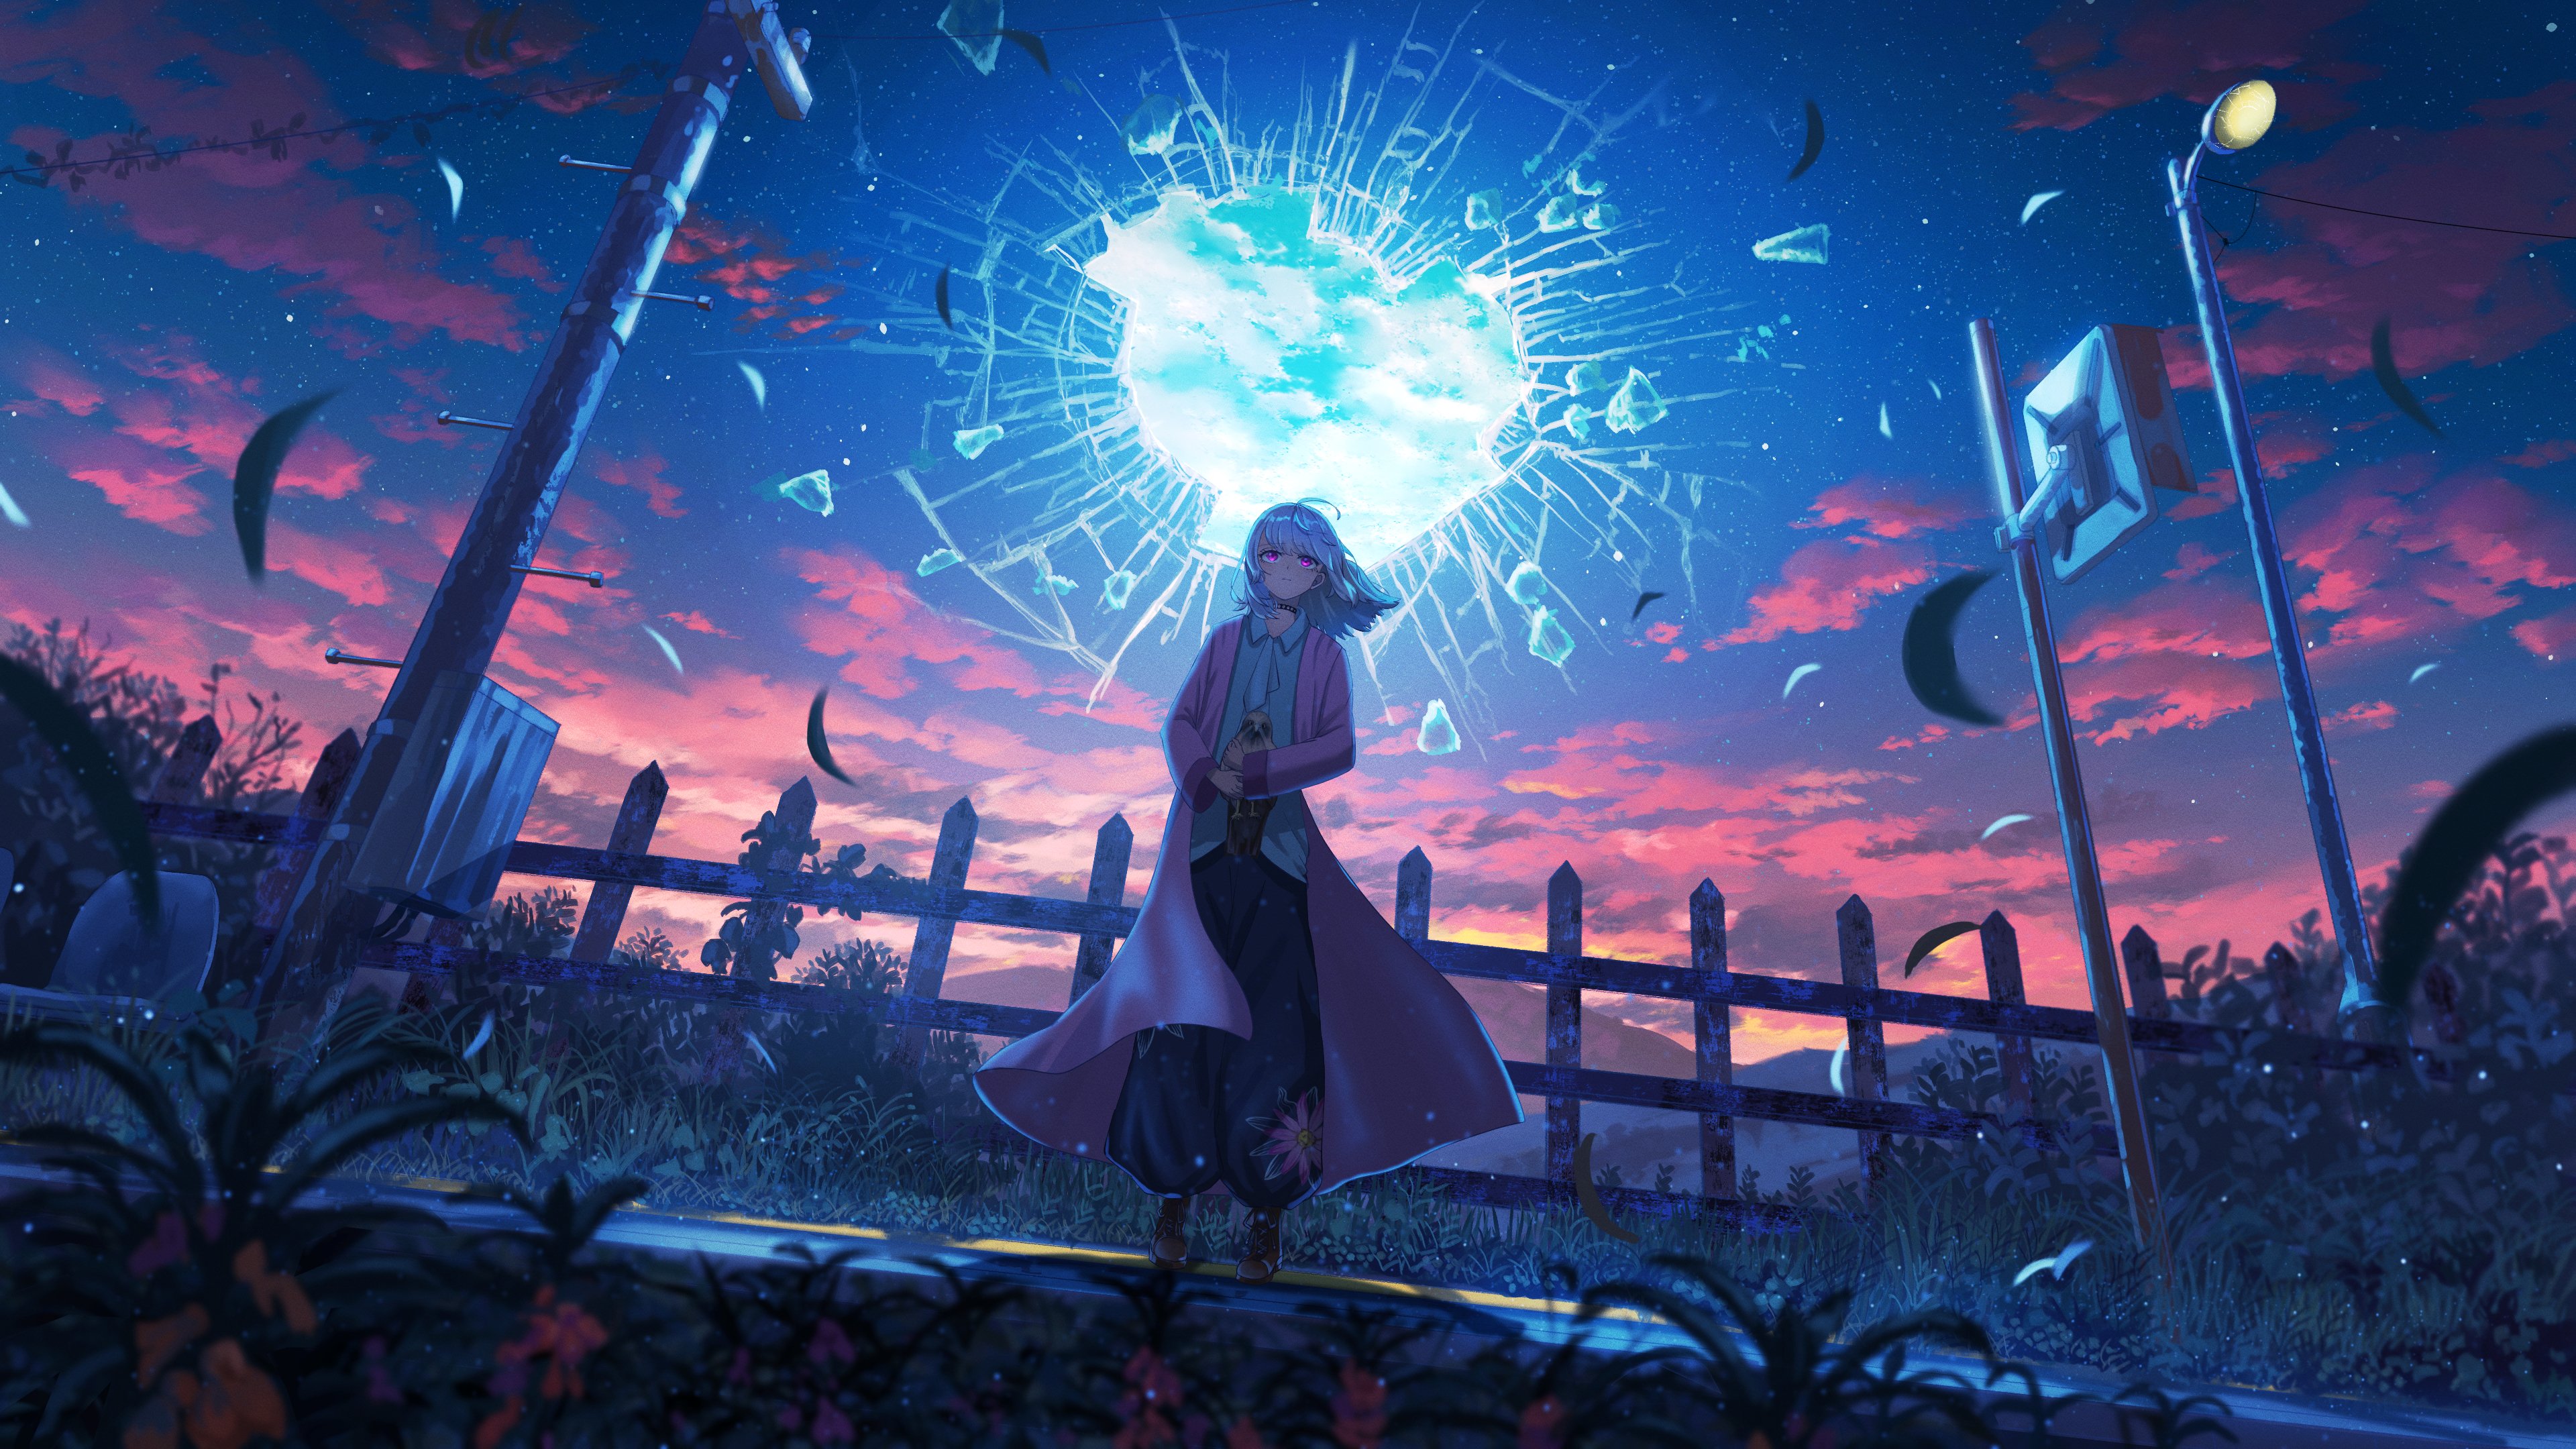 Shuu Illust Anime Digital Art Artwork Illustration Sky Sunset Clouds Starred Sky Plants Choker Women 3840x2160